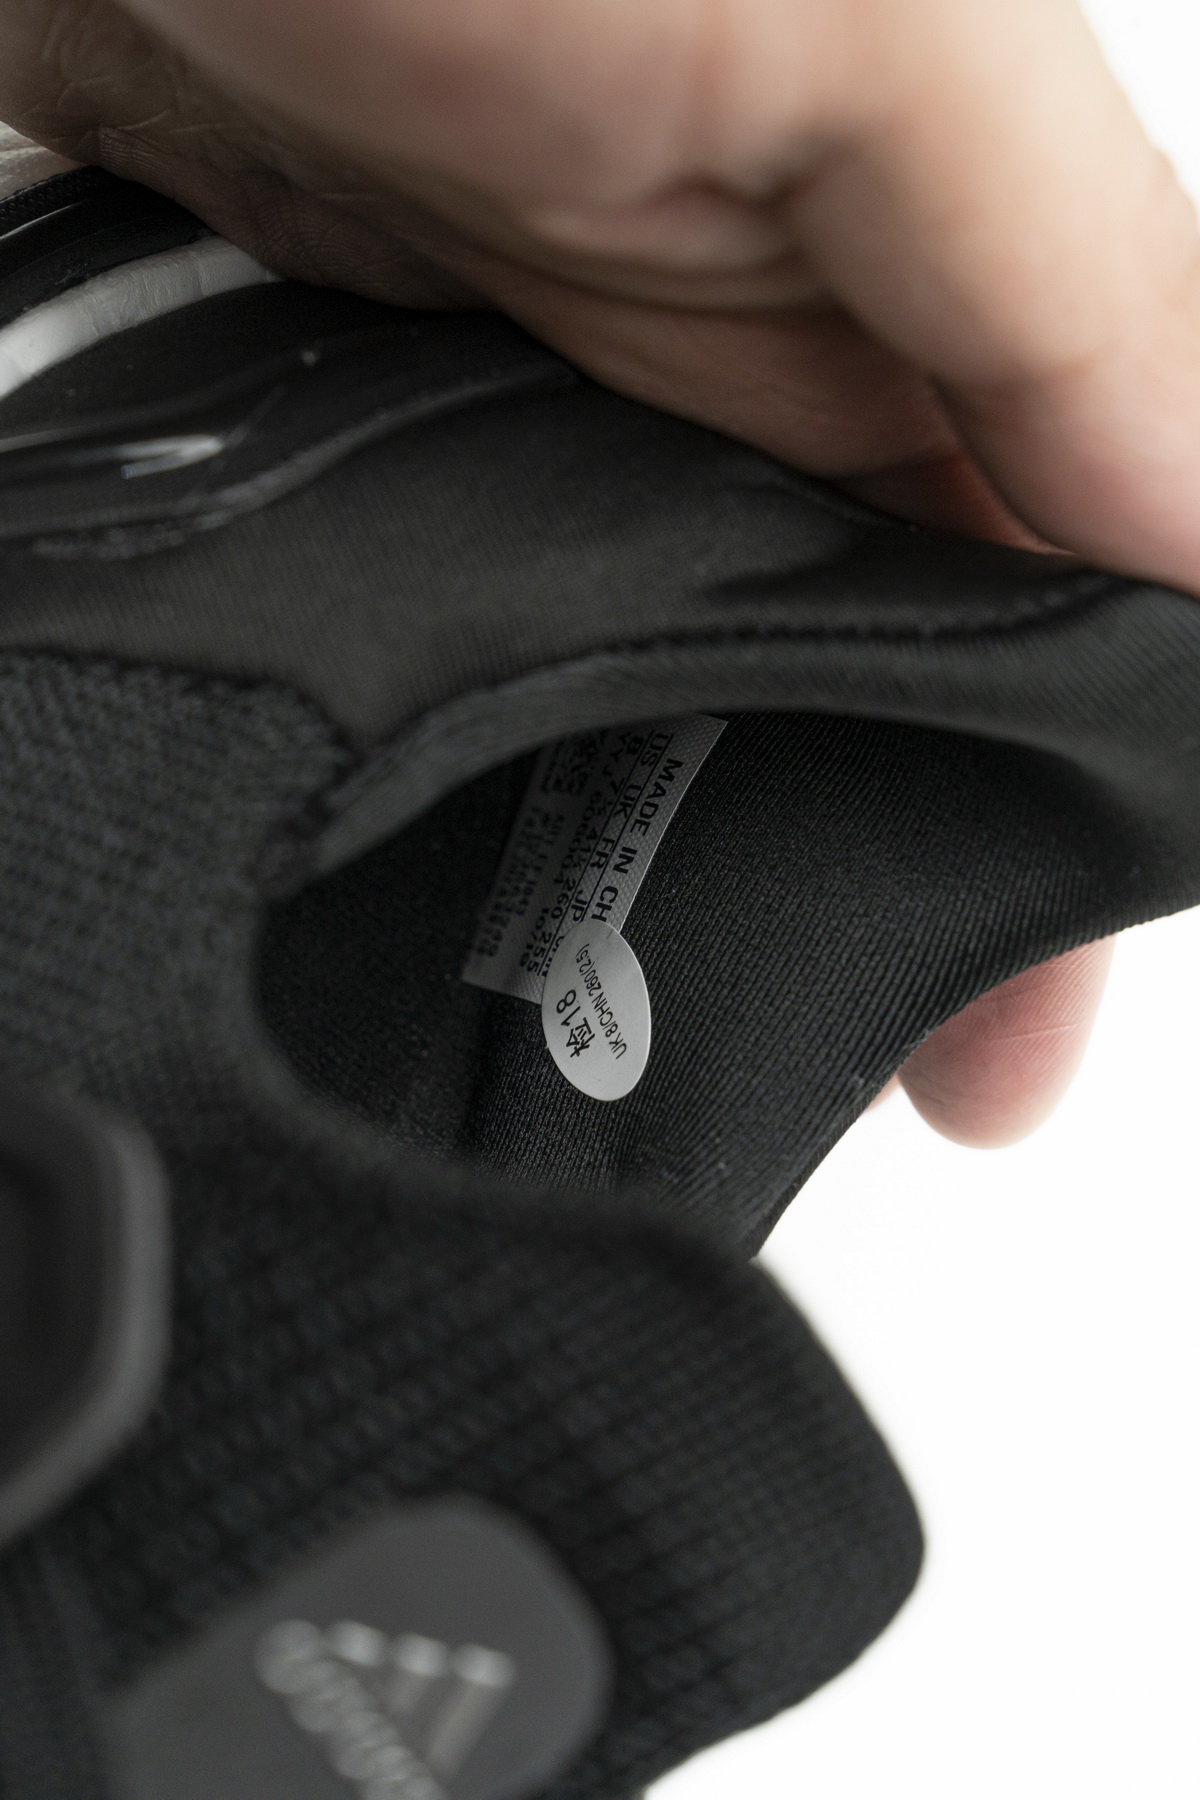 Adidas UltraBoost 20 Core Black EF1043 - Latest Release, Iconic Design